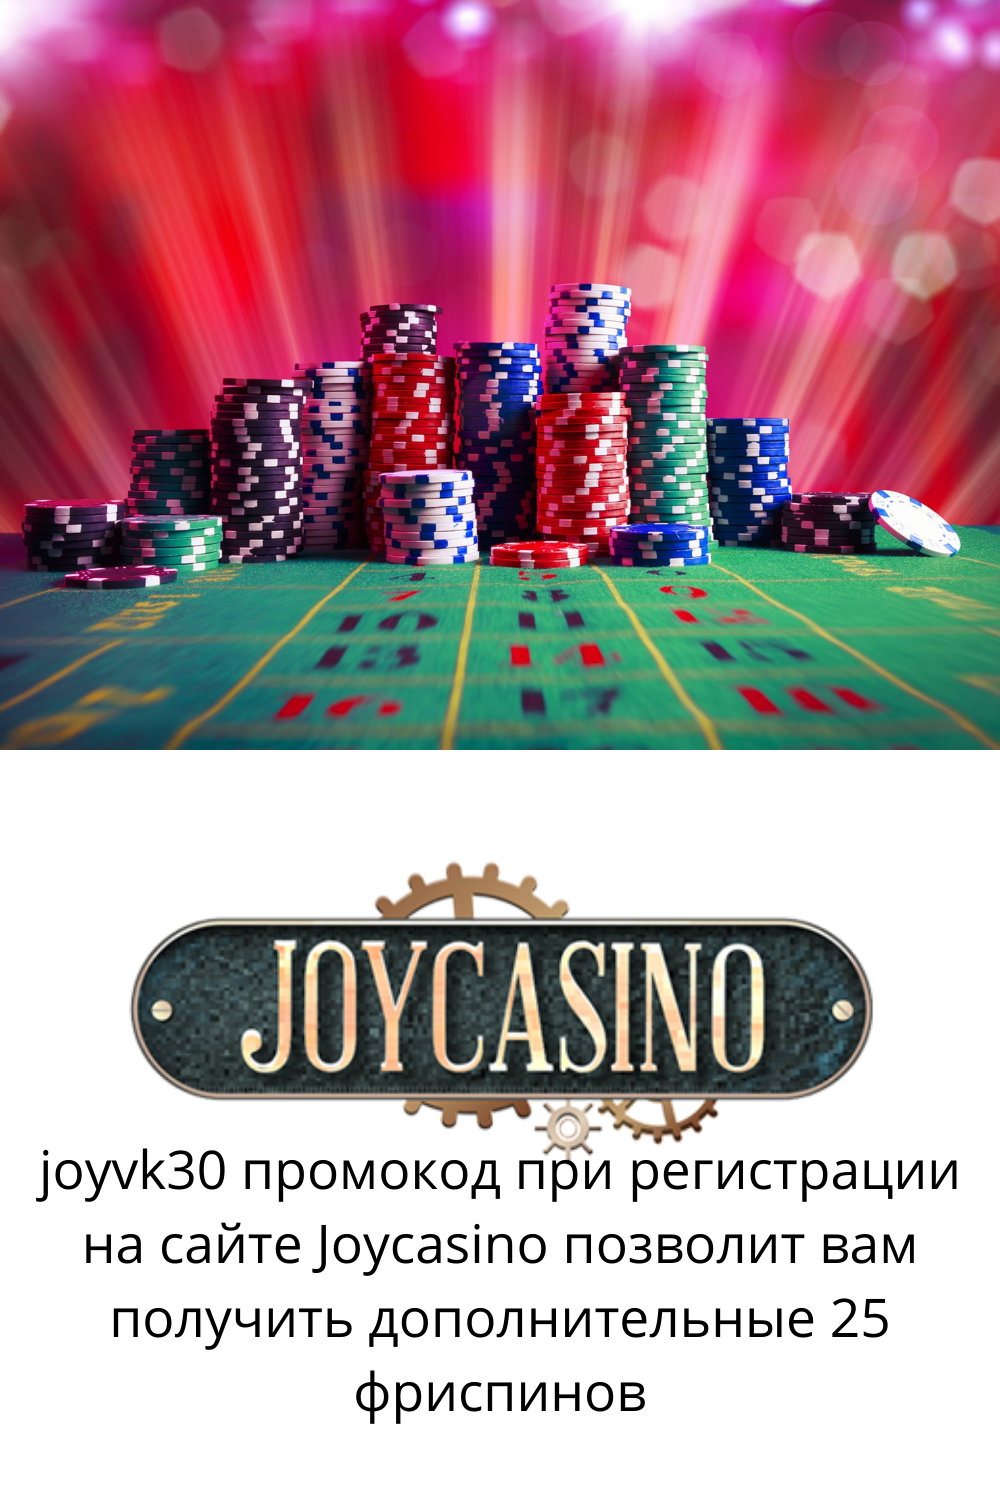 Casino joycasino сайт joycasino вин. Джойказино казино зеркало. Joycasino зеркало сайта.